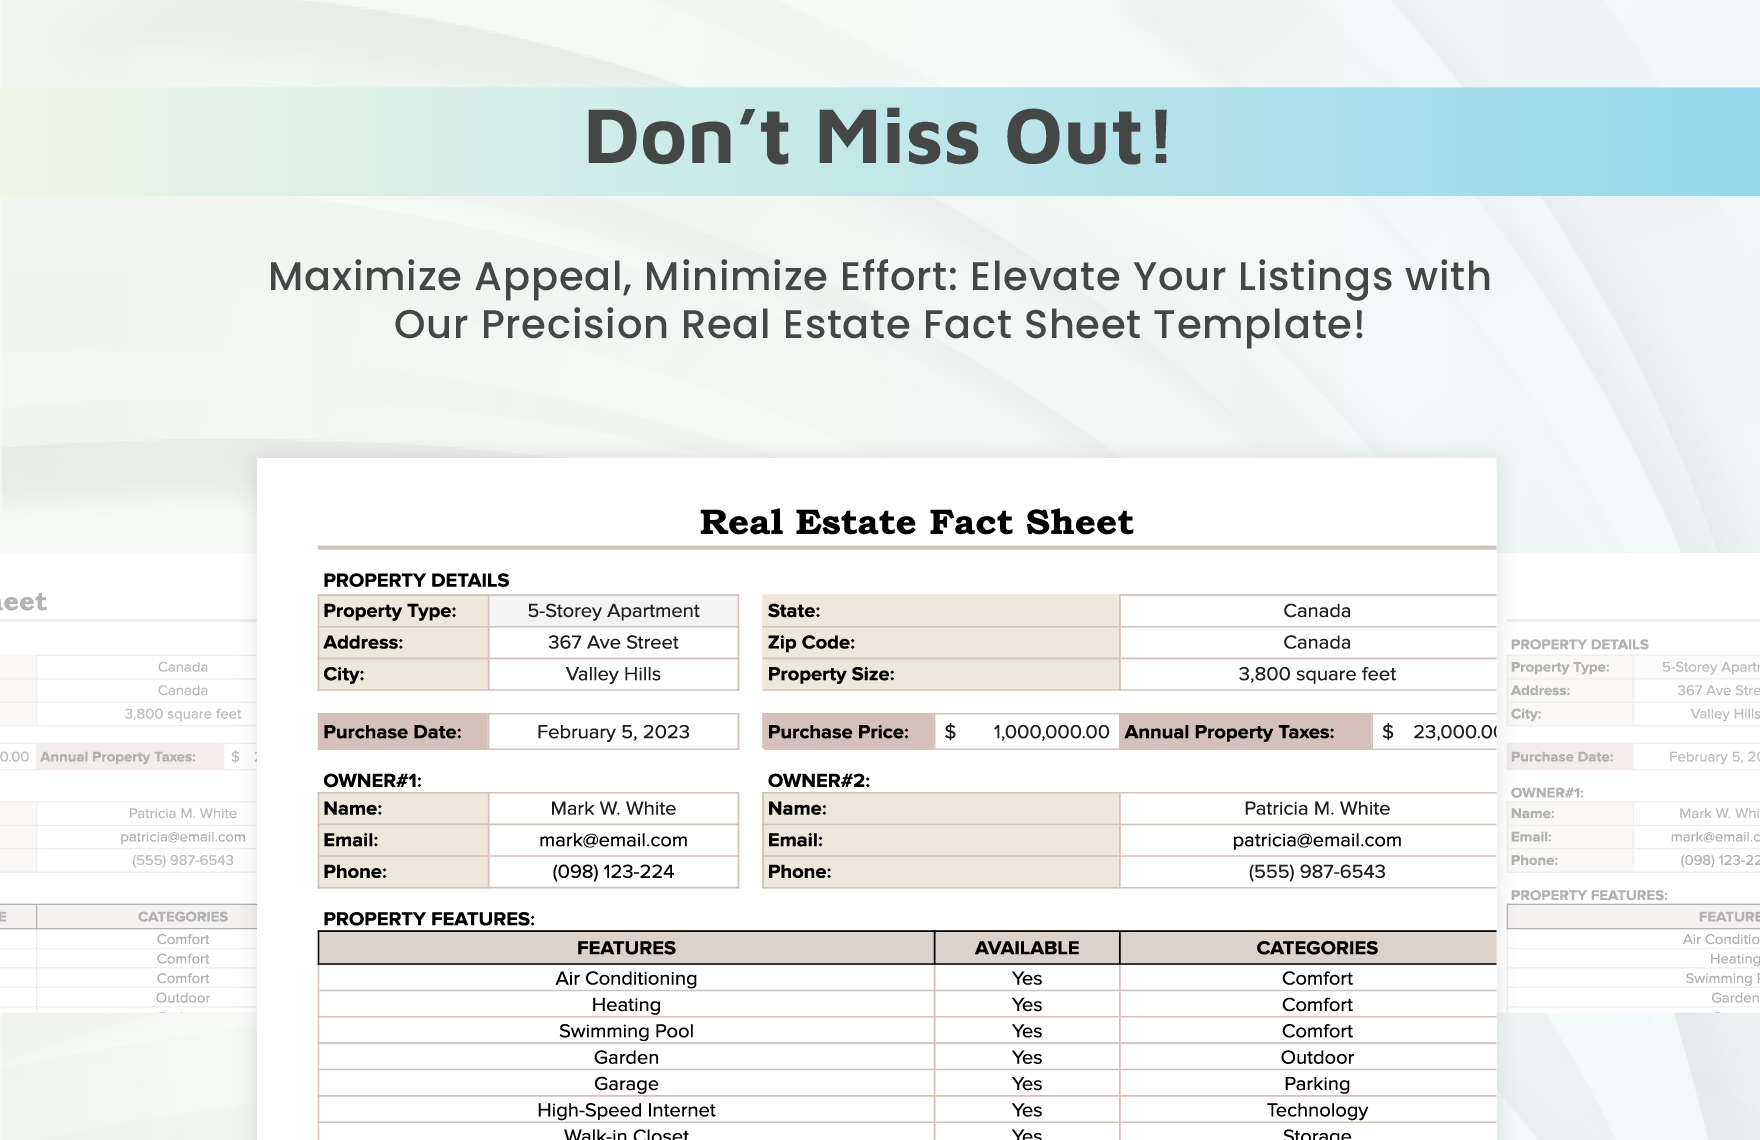 Real Estate Fact Sheet Template